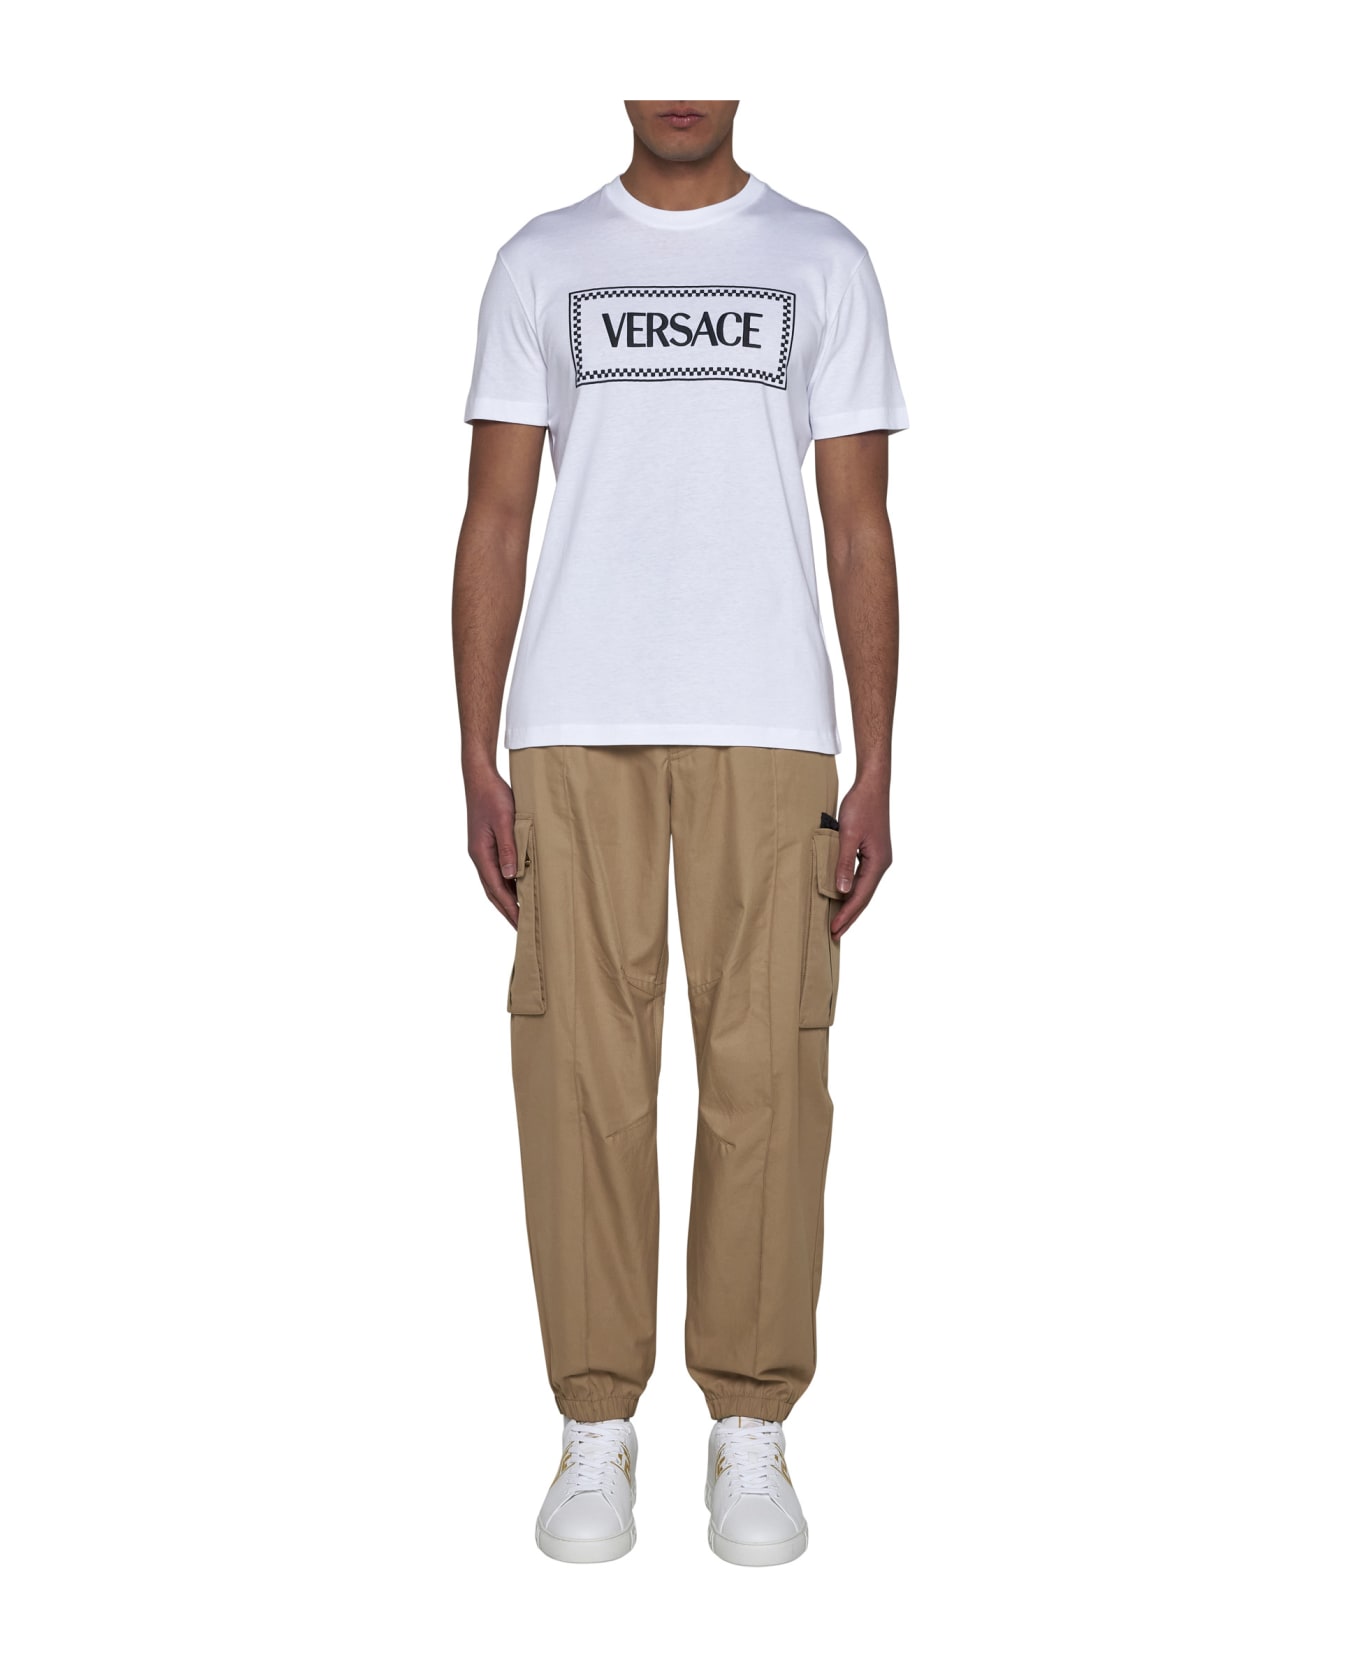 Versace T-Shirt - Optical white